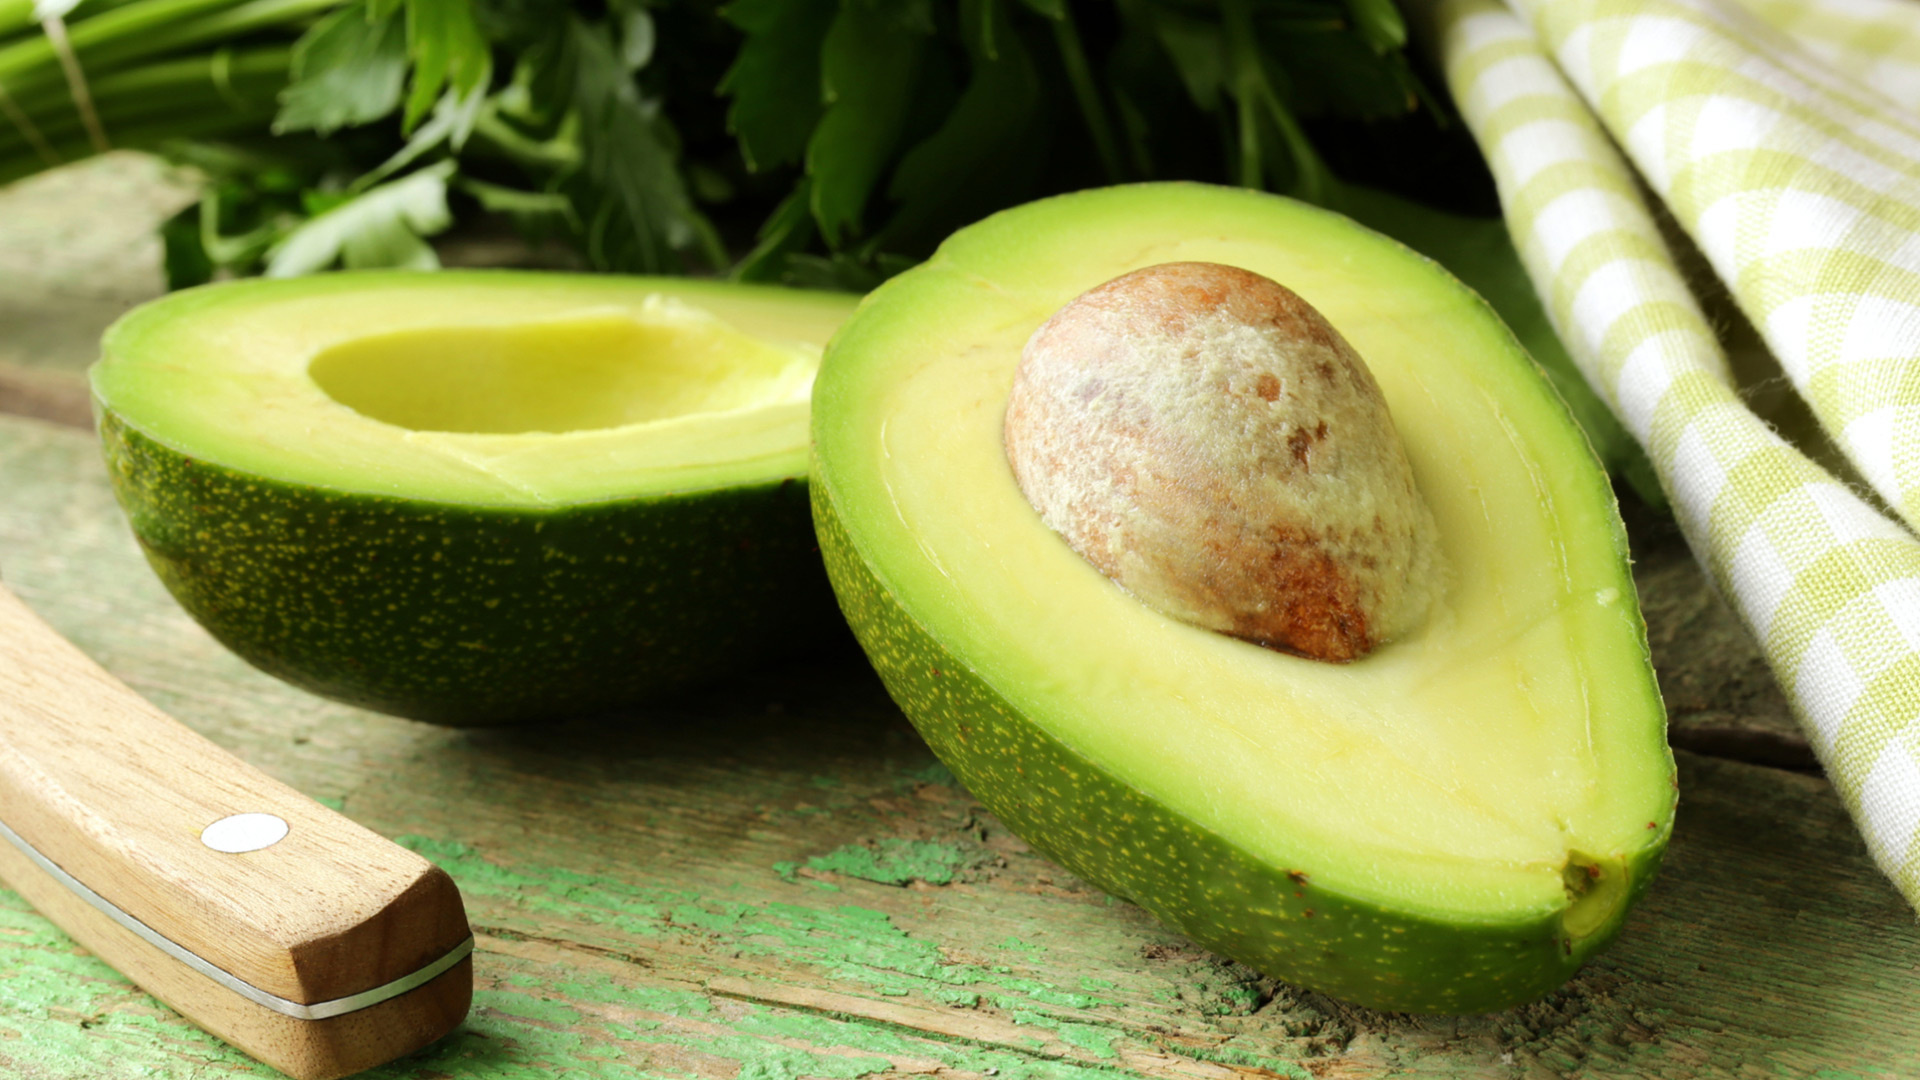 Avocado: Green, pear-shaped, nutrient-dense fruit. 1920x1080 Full HD Wallpaper.